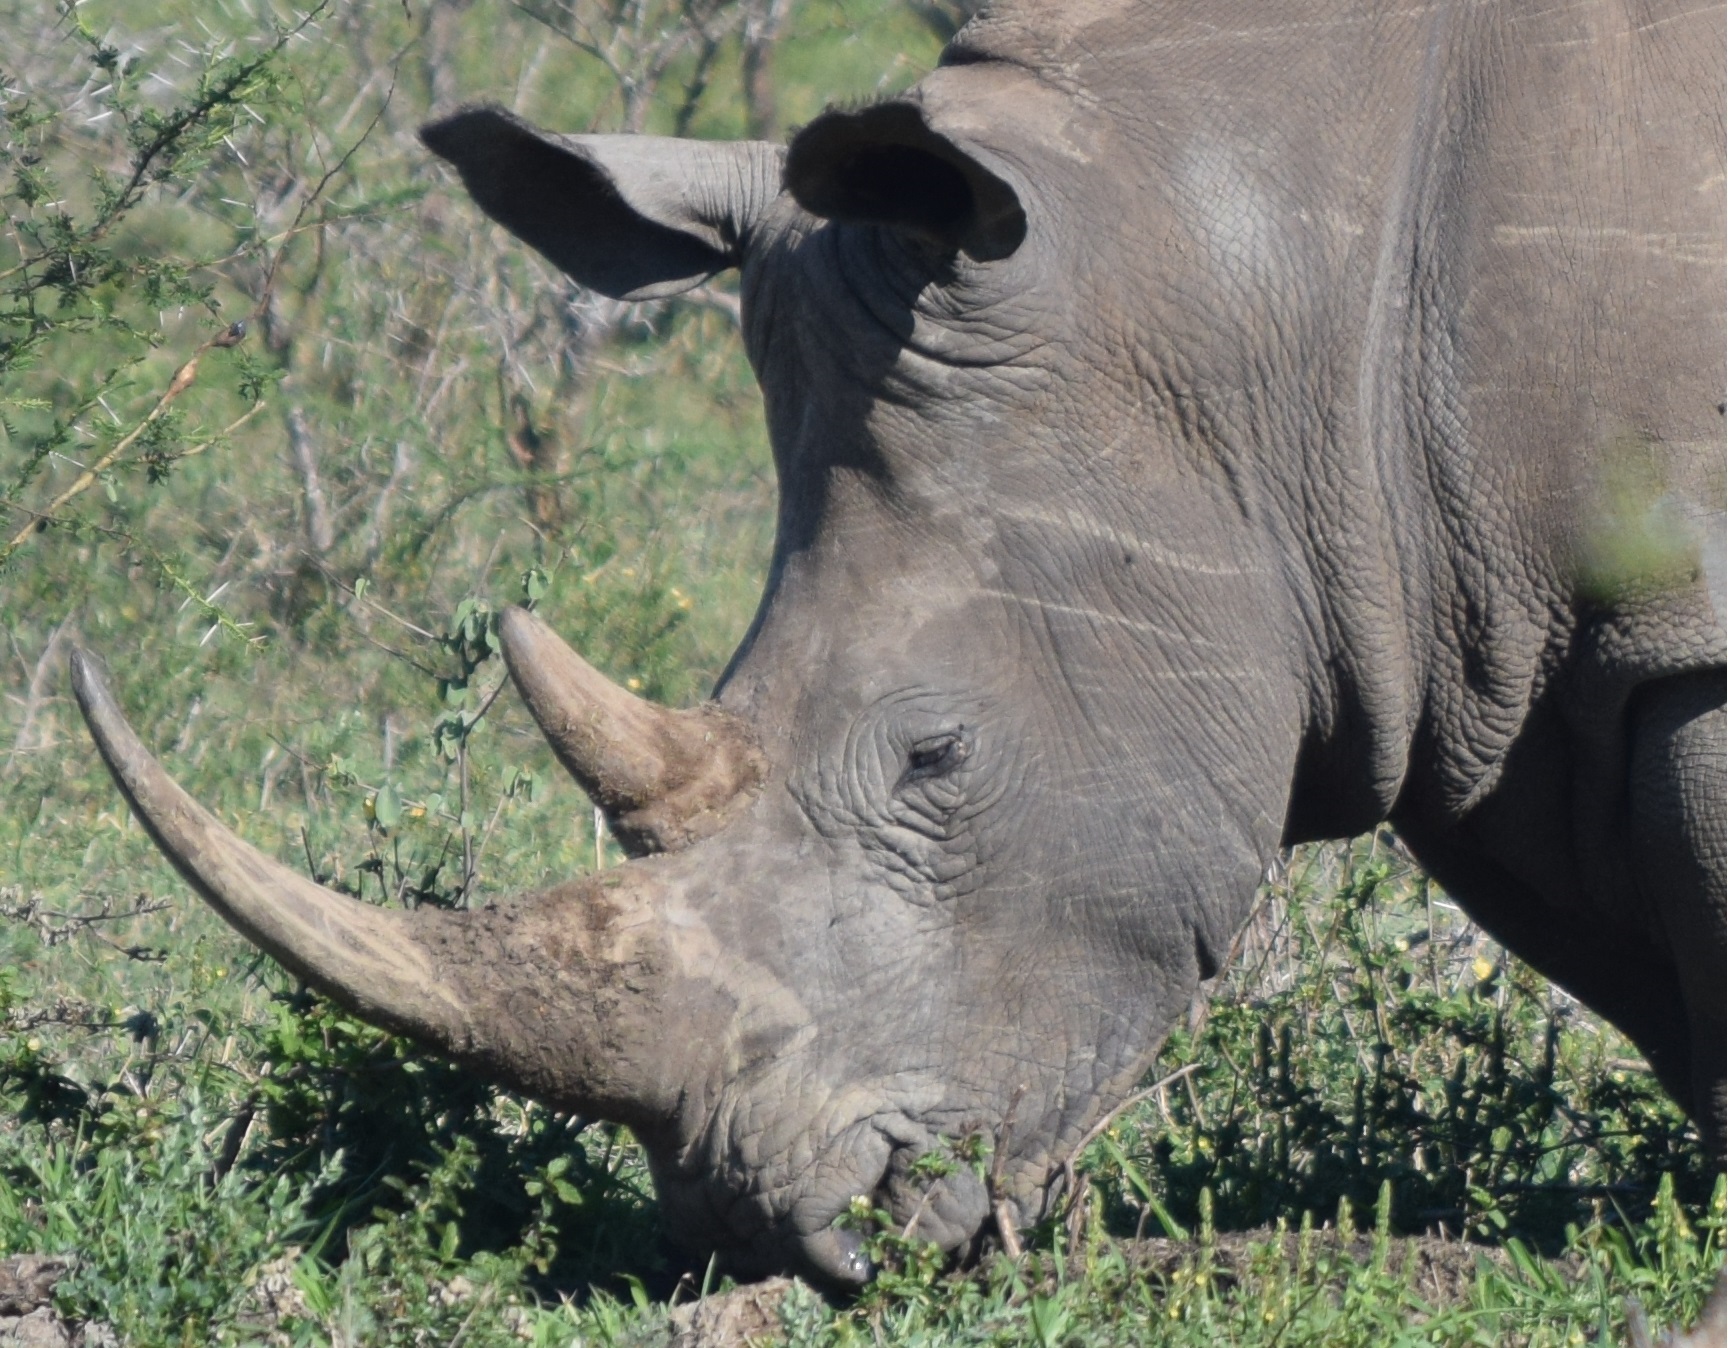 Legalizing rhino horn